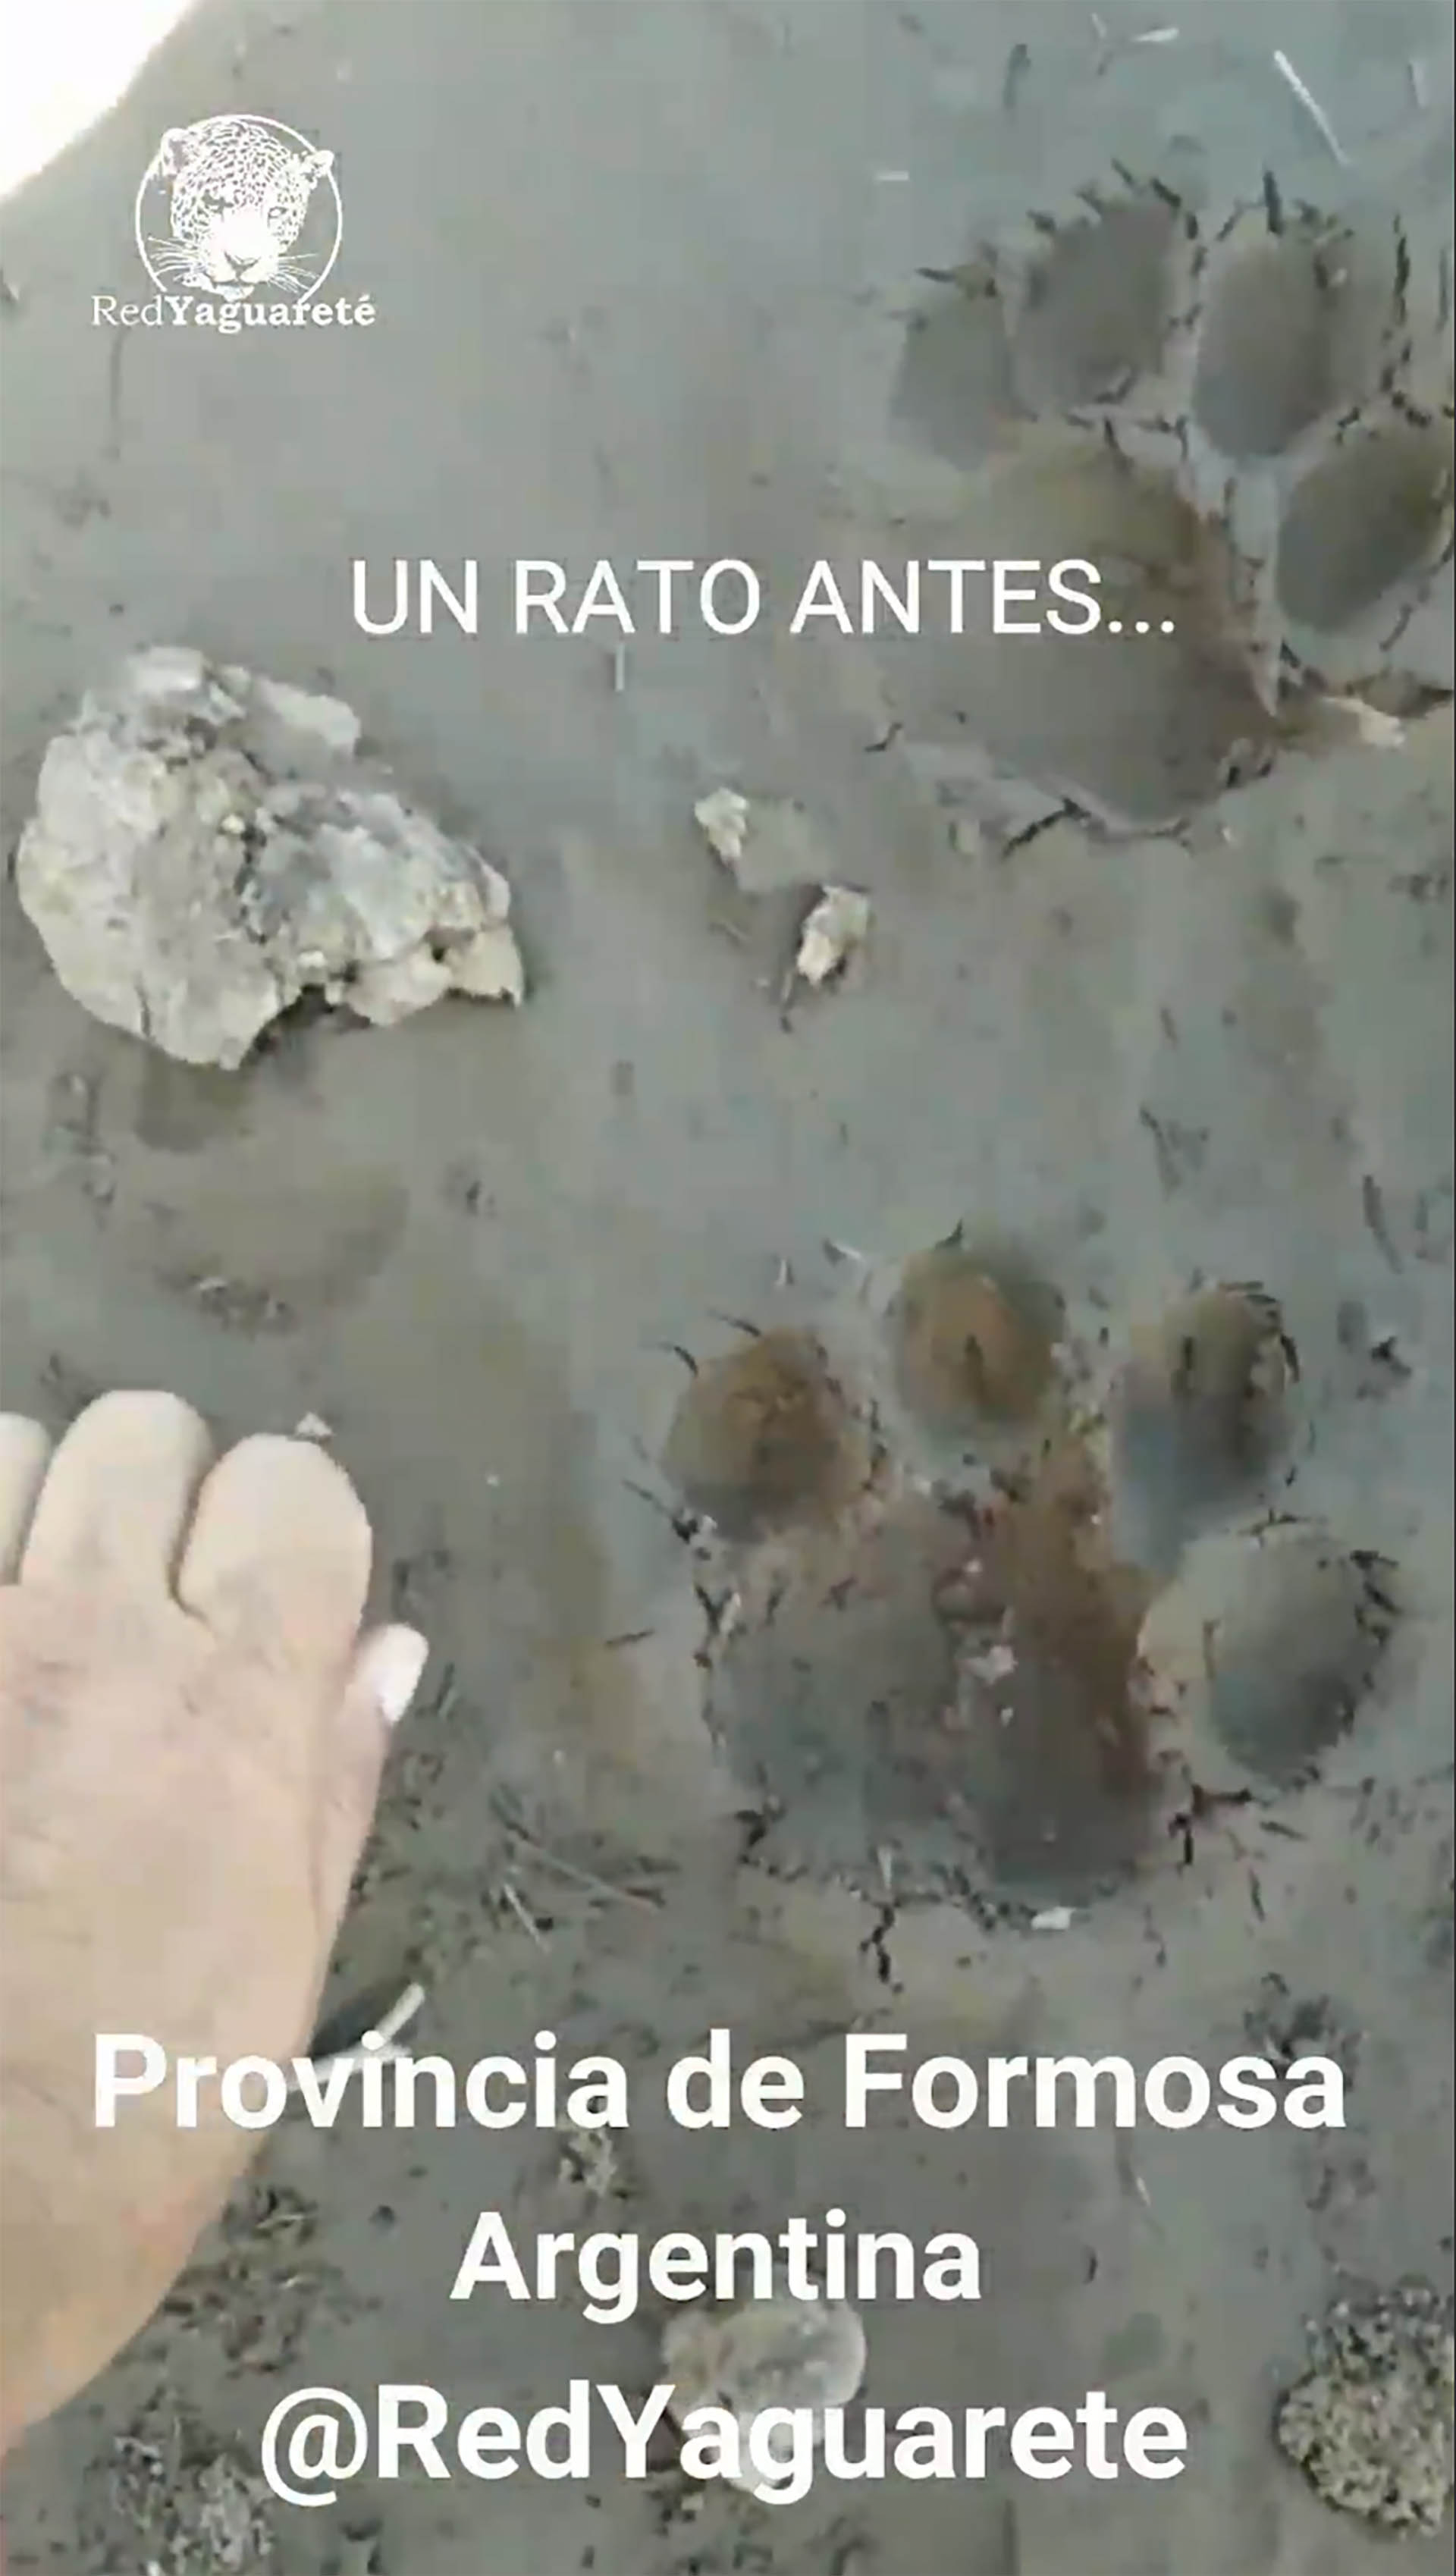 Las huellas del animal asesinado (captura Red Yaguareté)